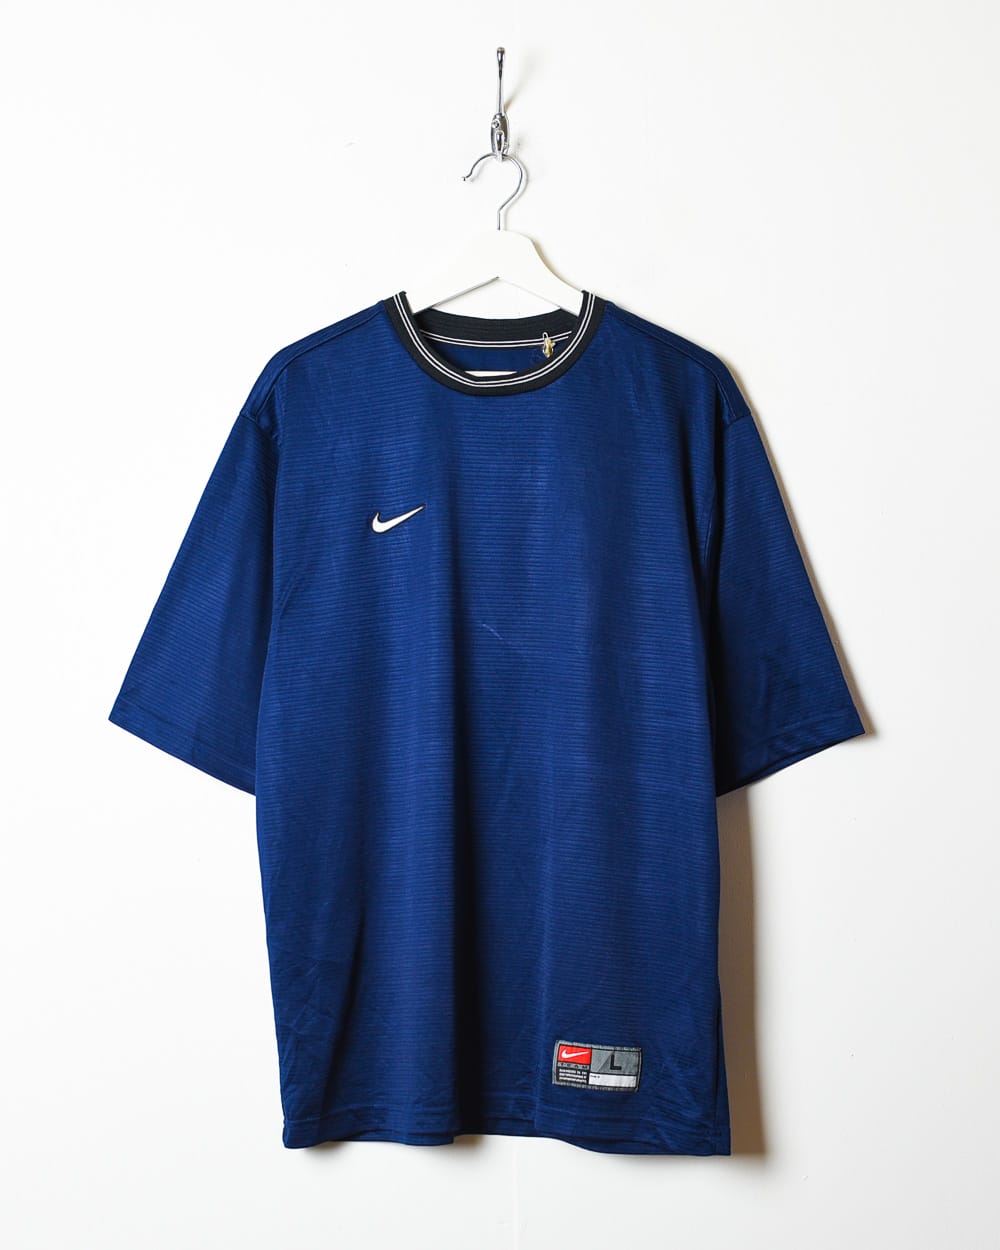 Navy Nike Team T-Shirt - Large